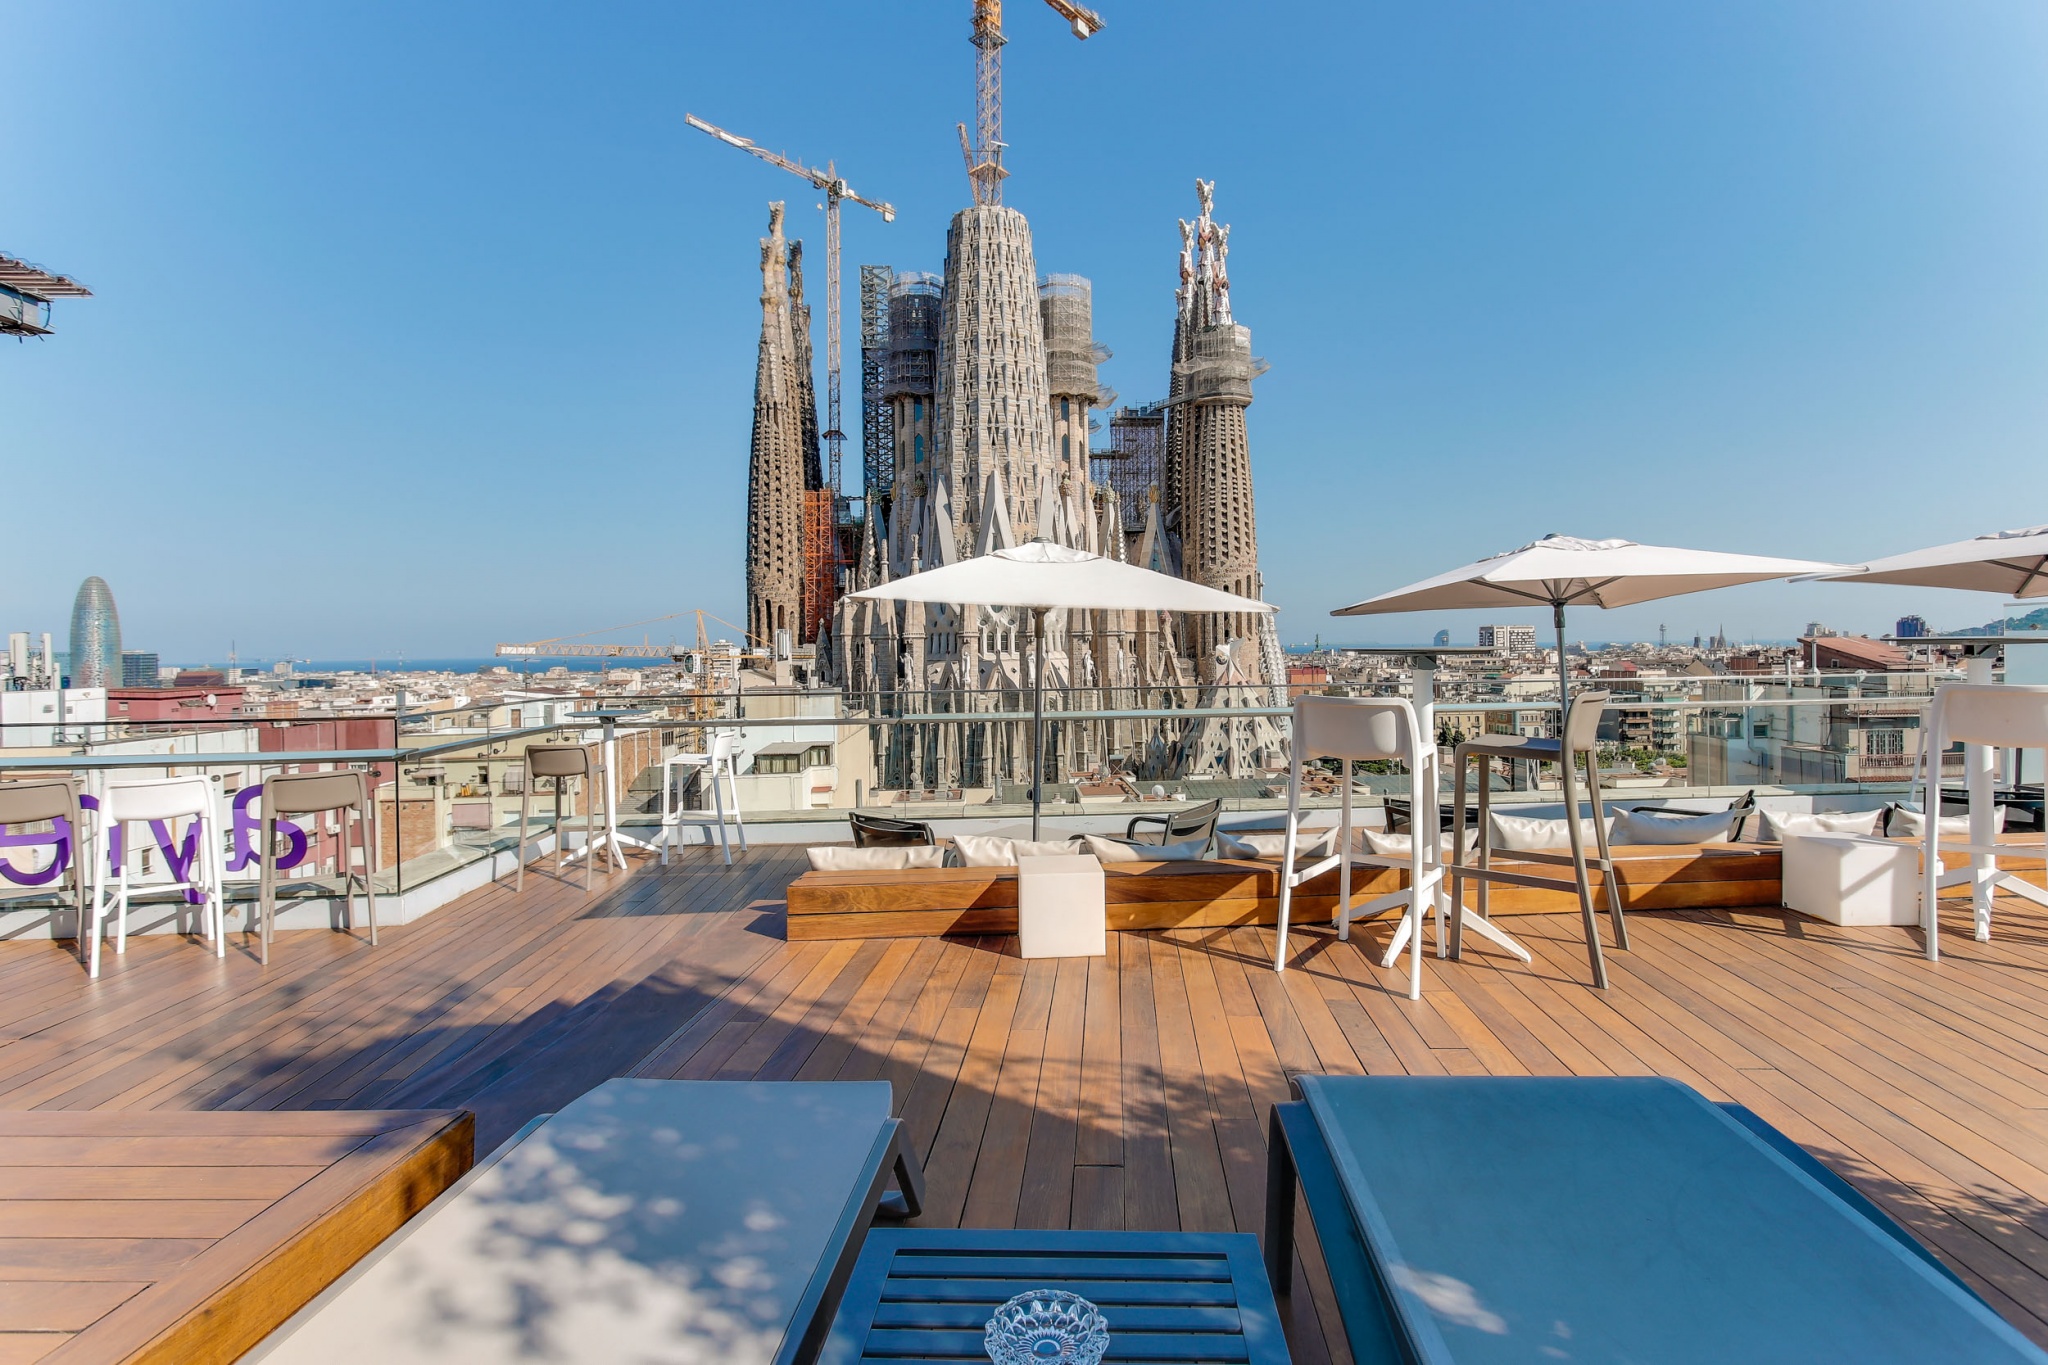 Best Rooftop Bars In Barcelona Barcelona Food Experience